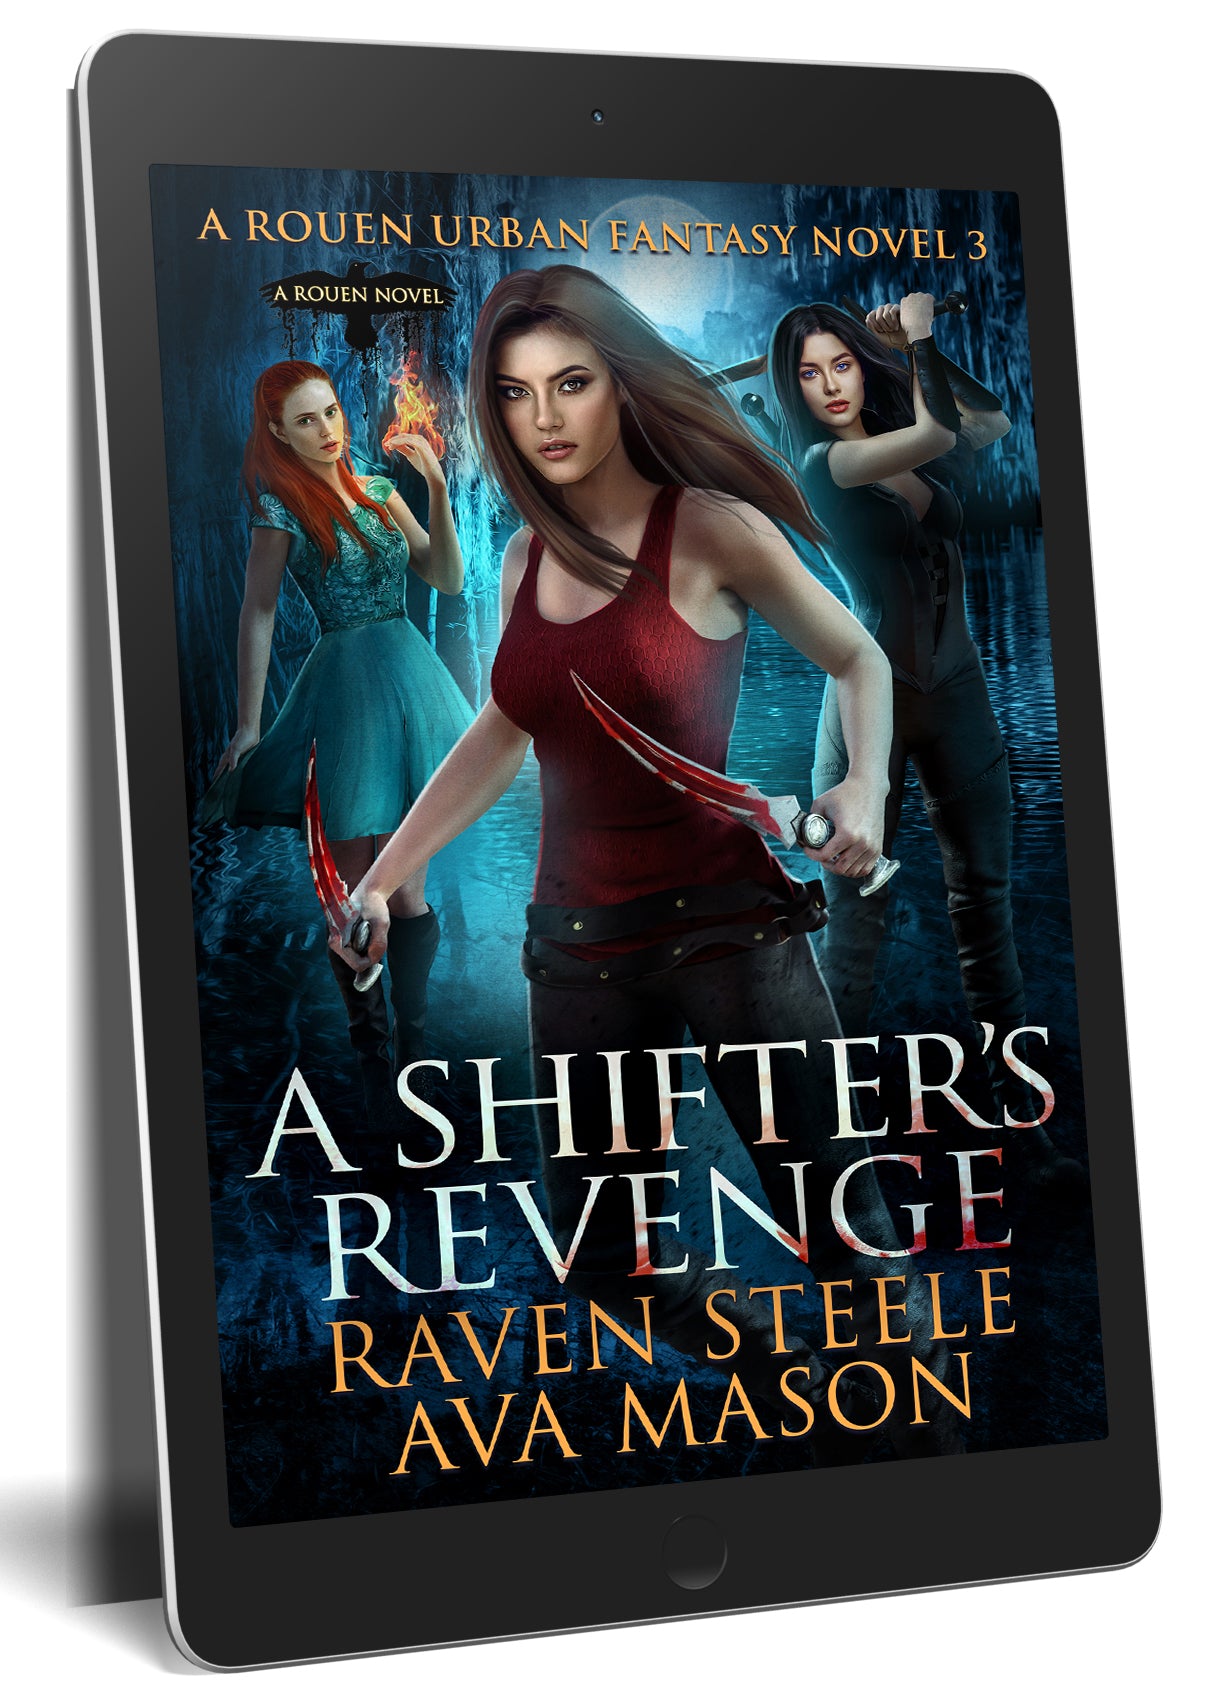 A Shifter's Revenge: A Gritty Urban Fantasy Novel (Rouen Chronicles Book 3)